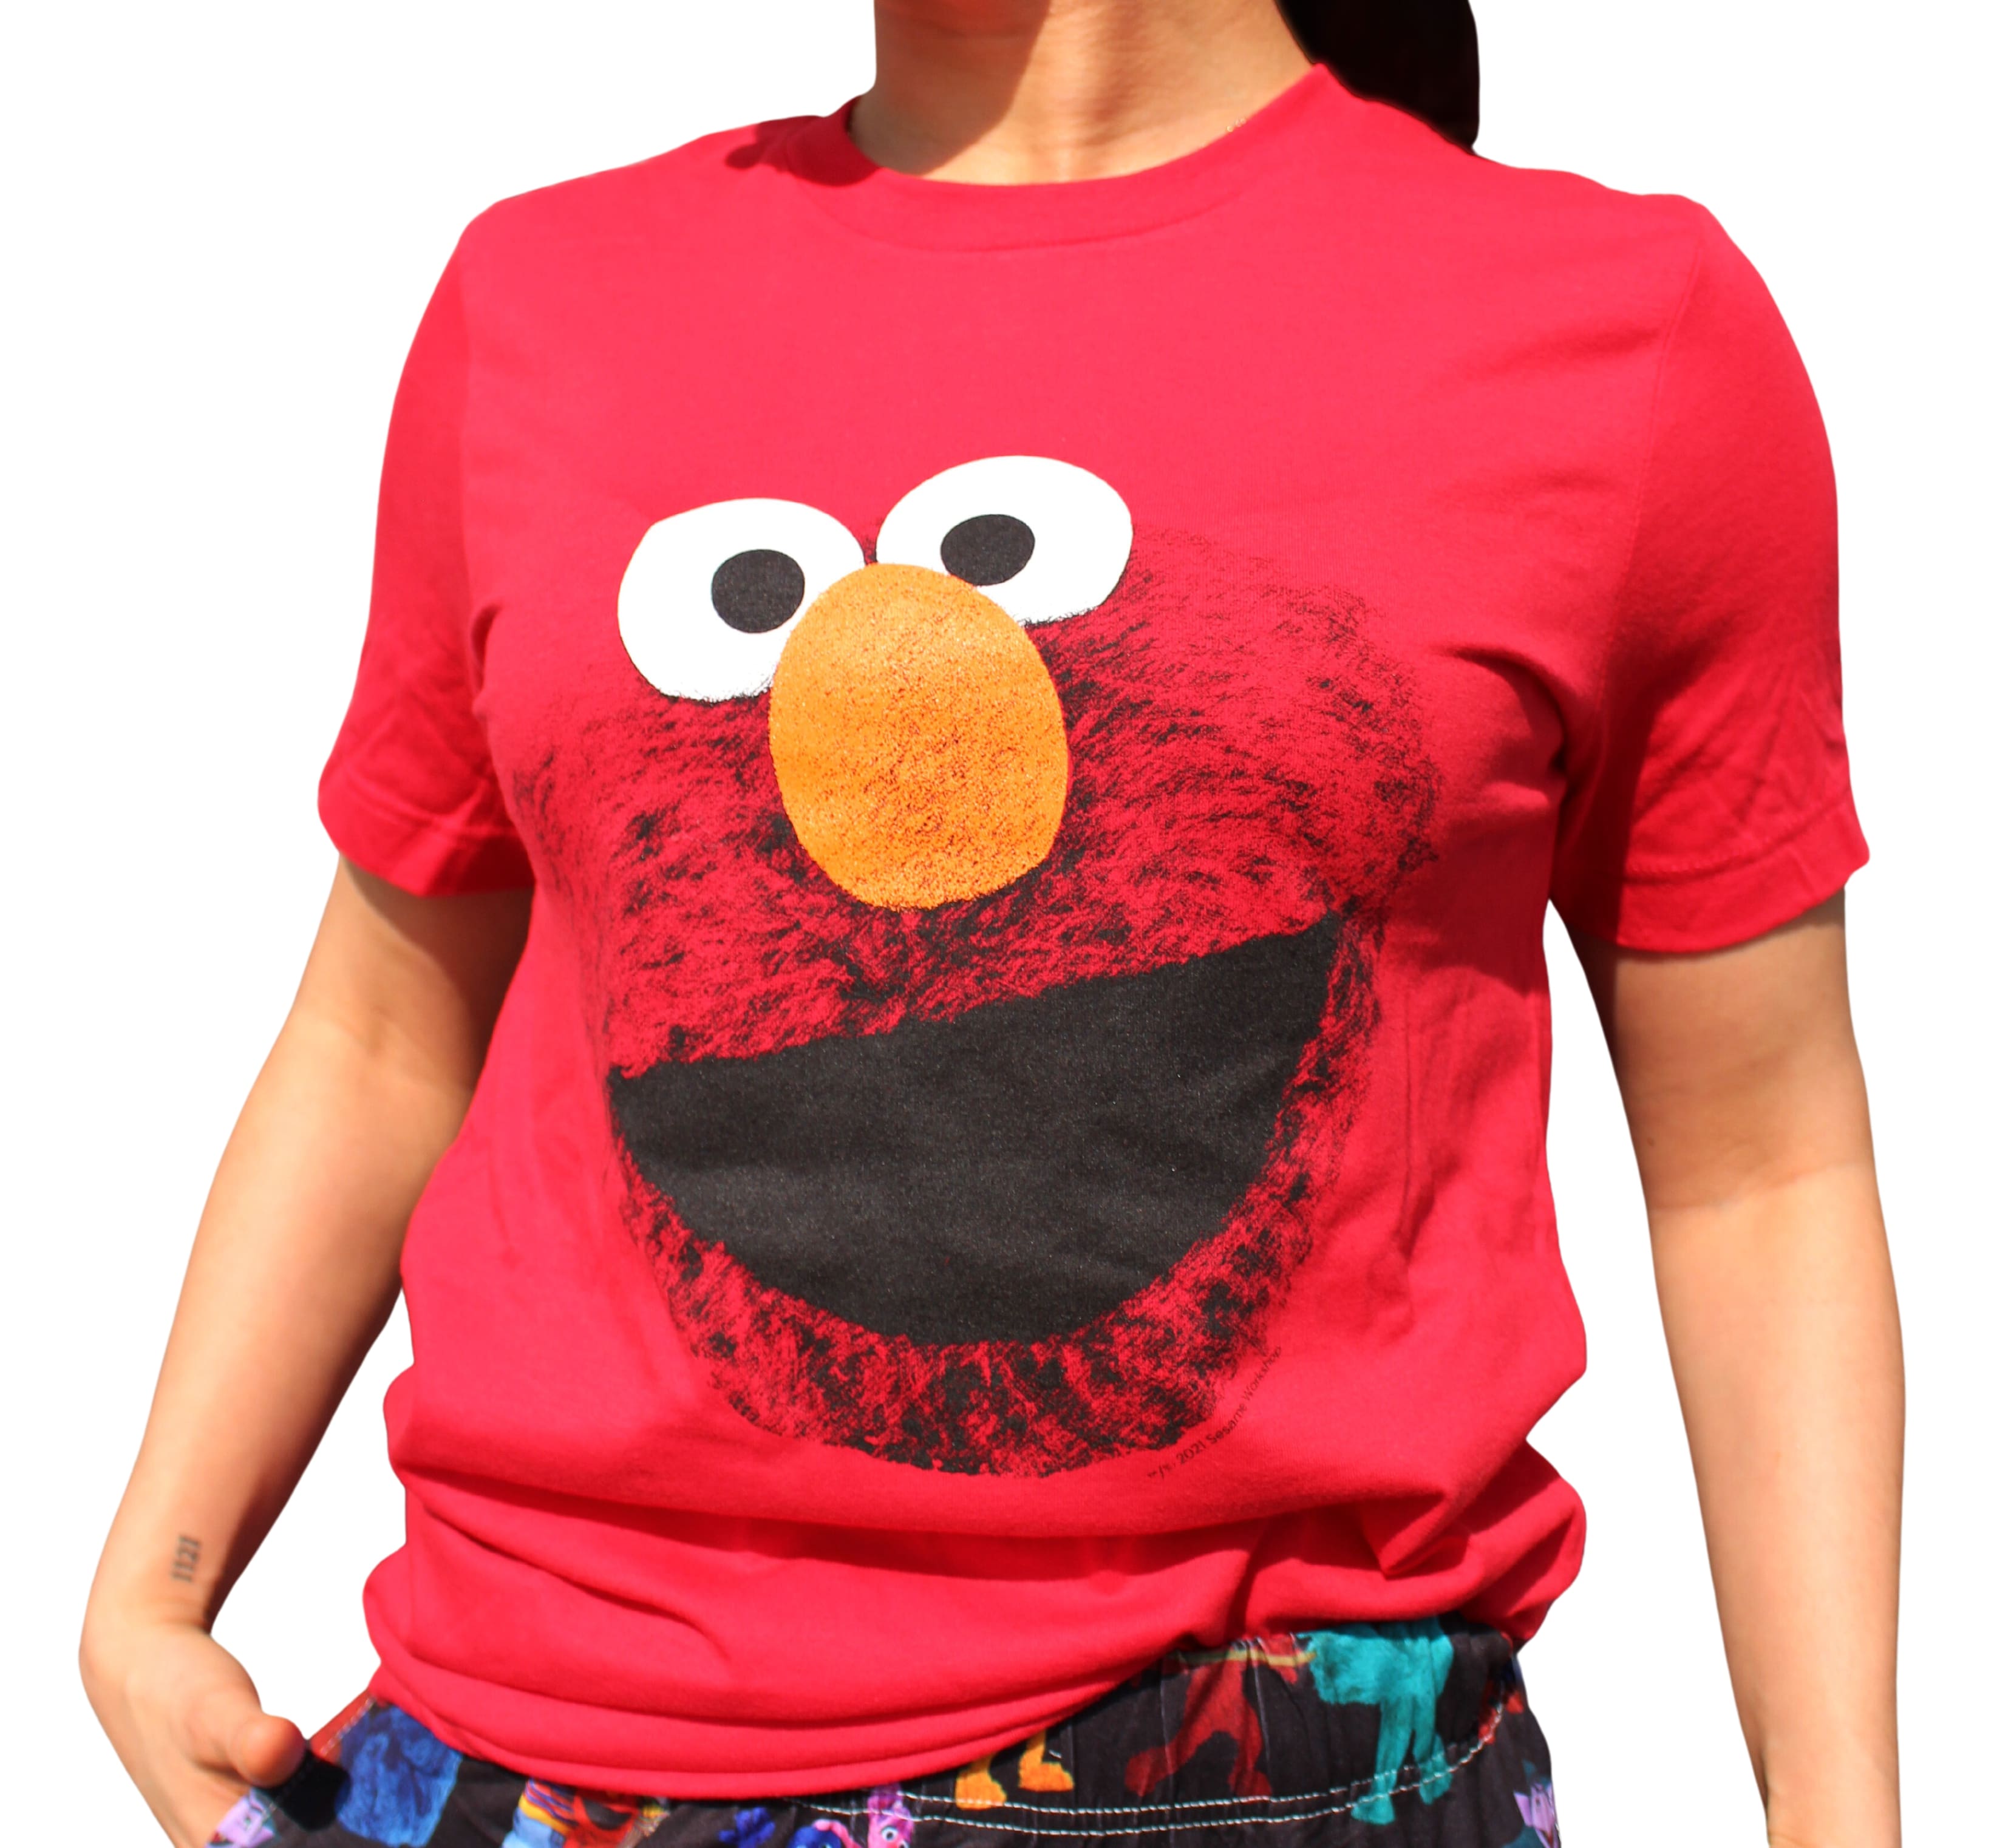 Sesame Street Elmo shirt on model front view